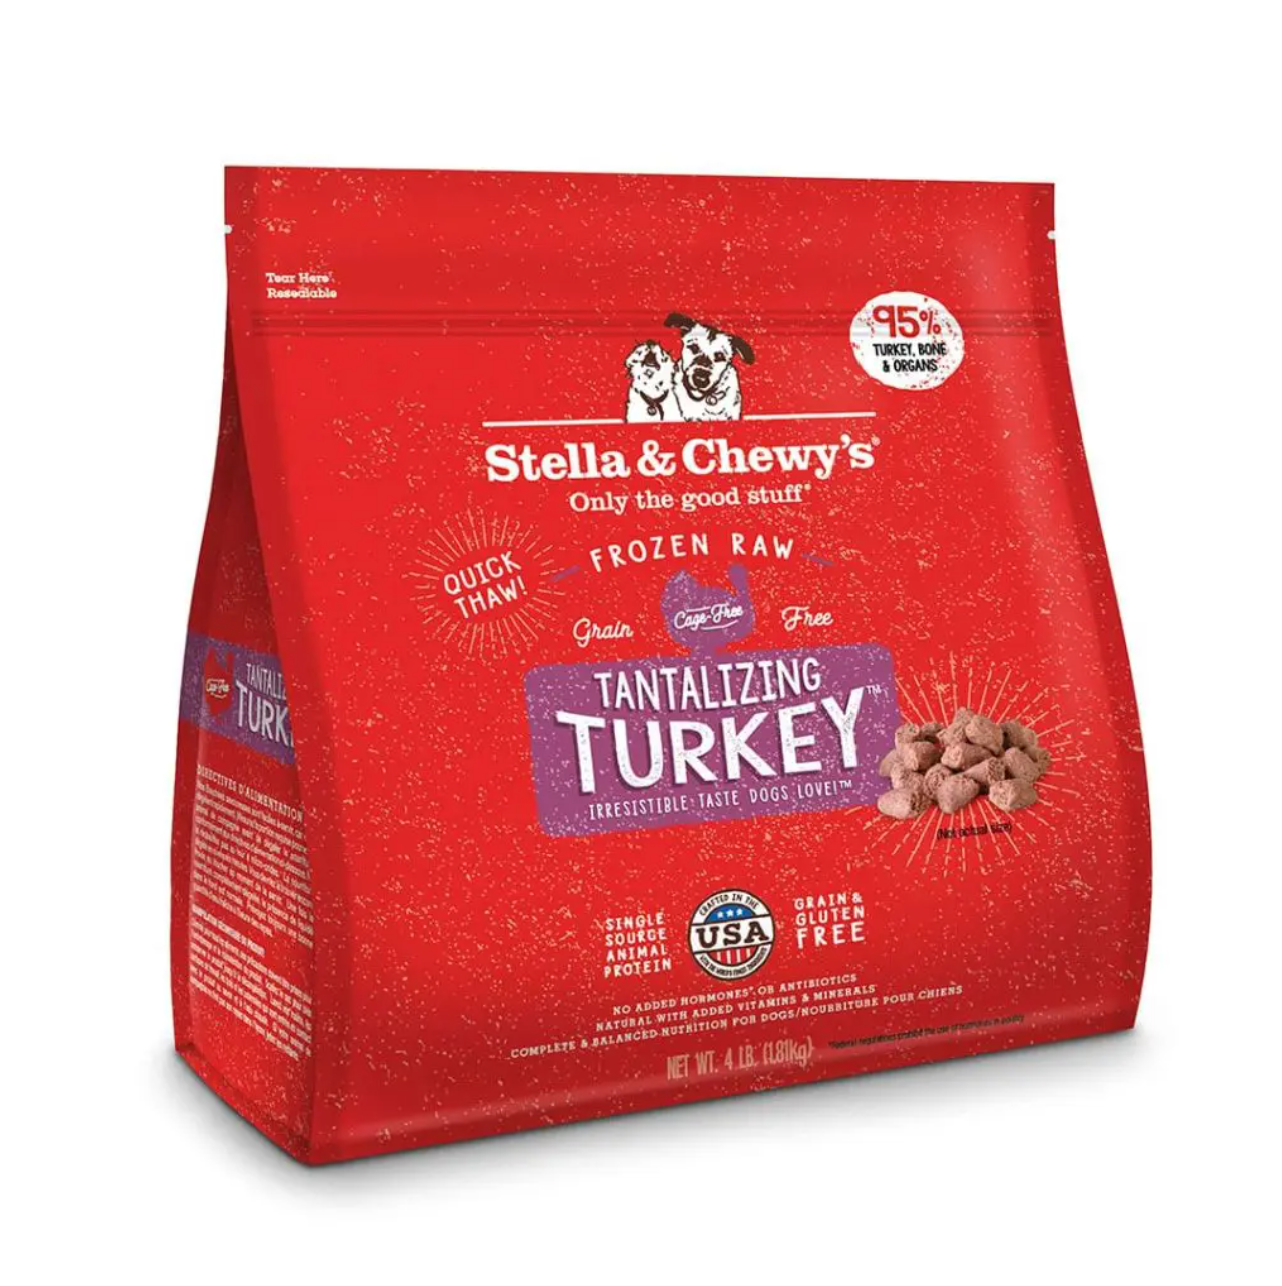 Stella & Chewy's Tantalizing Turkey Frozen Dinner Morsels